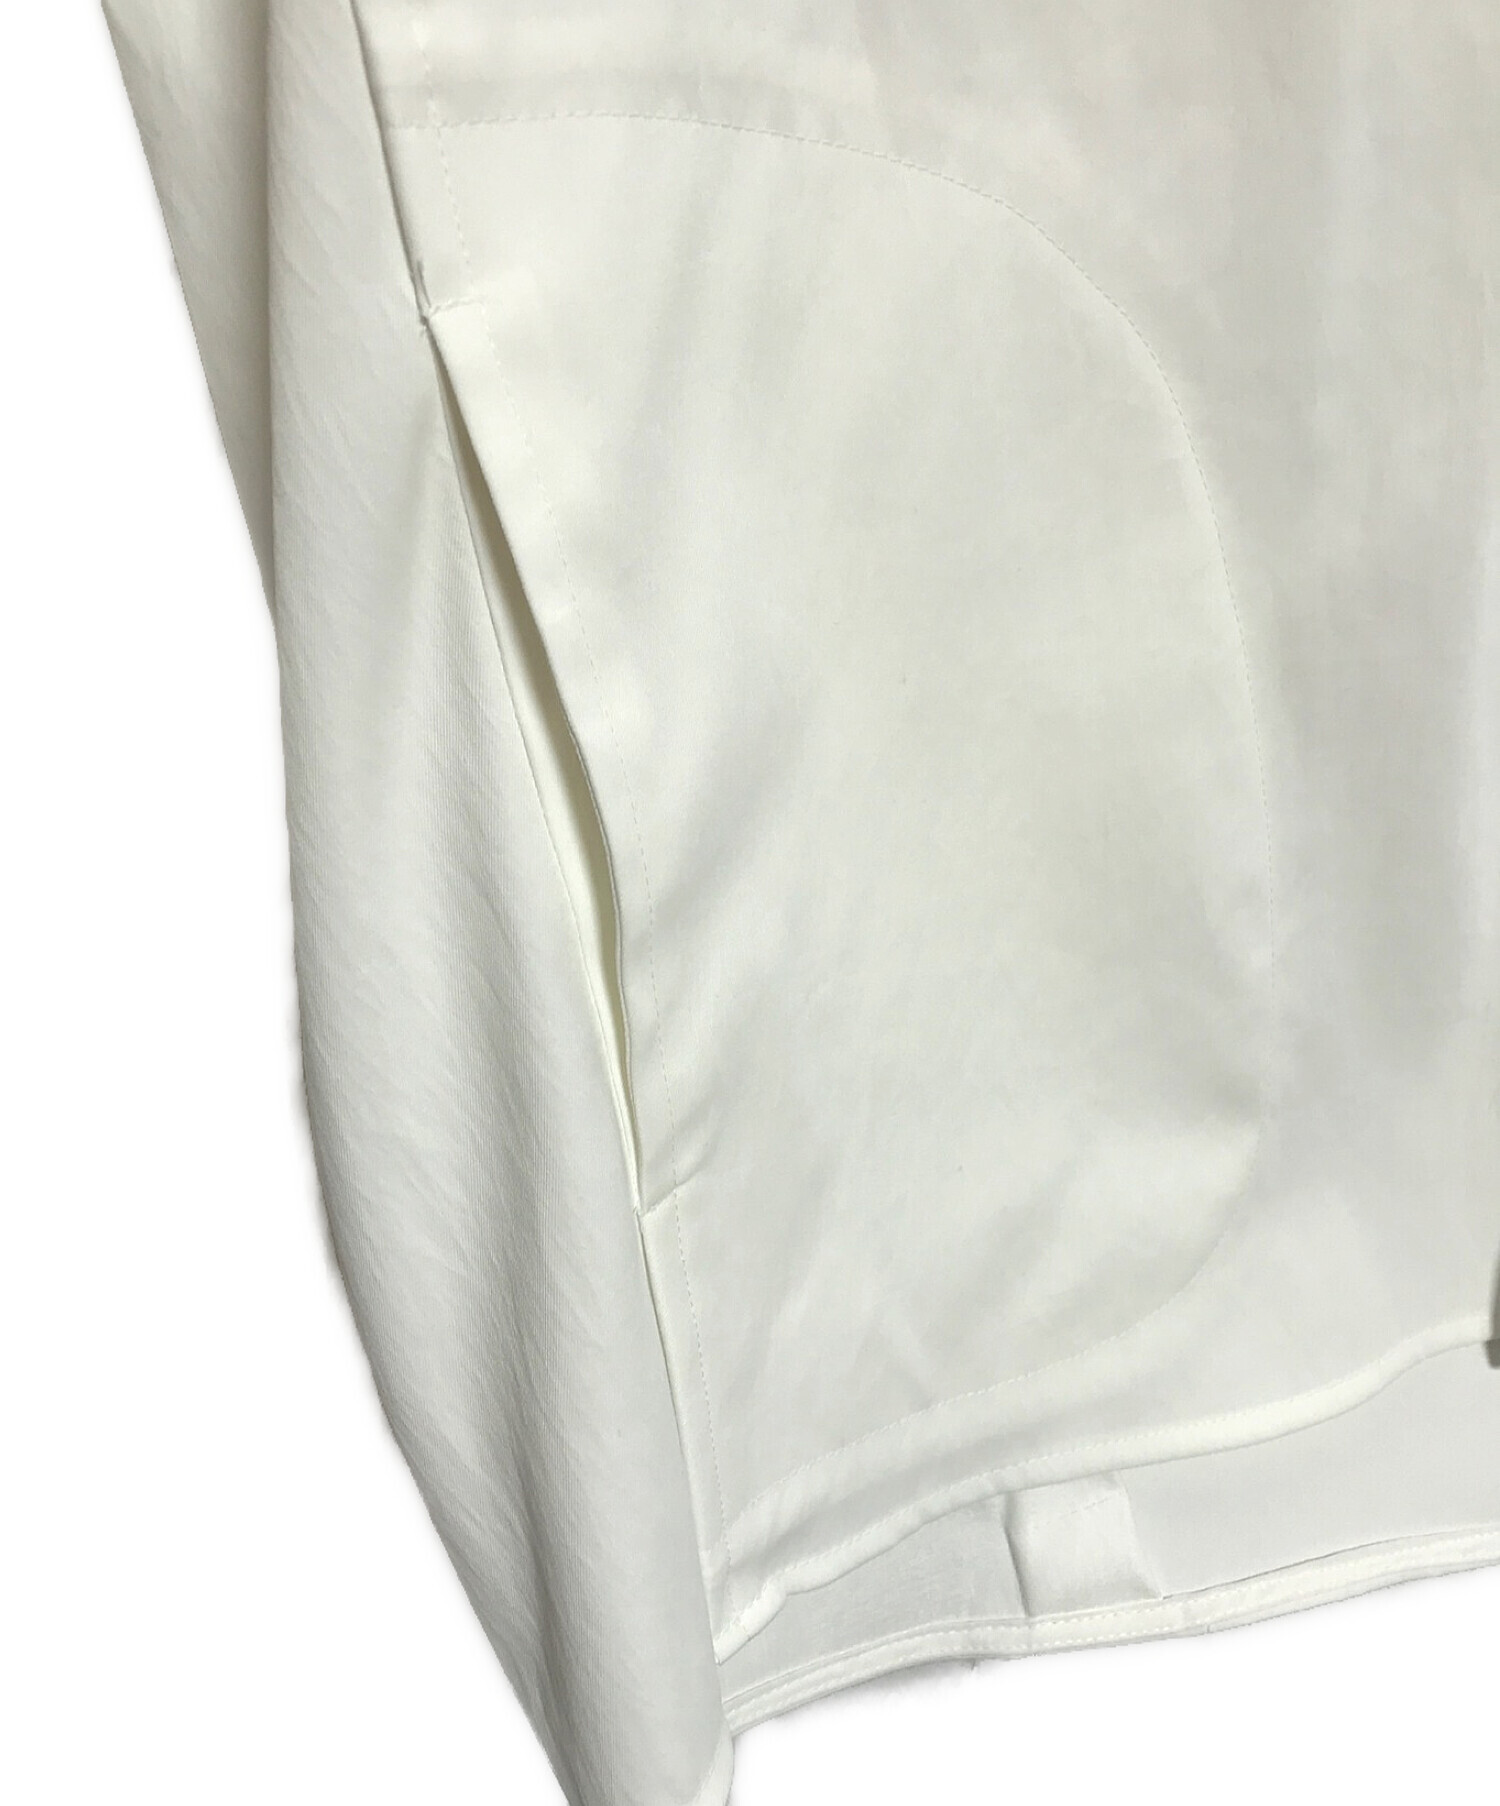 YORI (ヨリ) ノーカラーコクーンジャケット ホワイト サイズ:38 未使用品